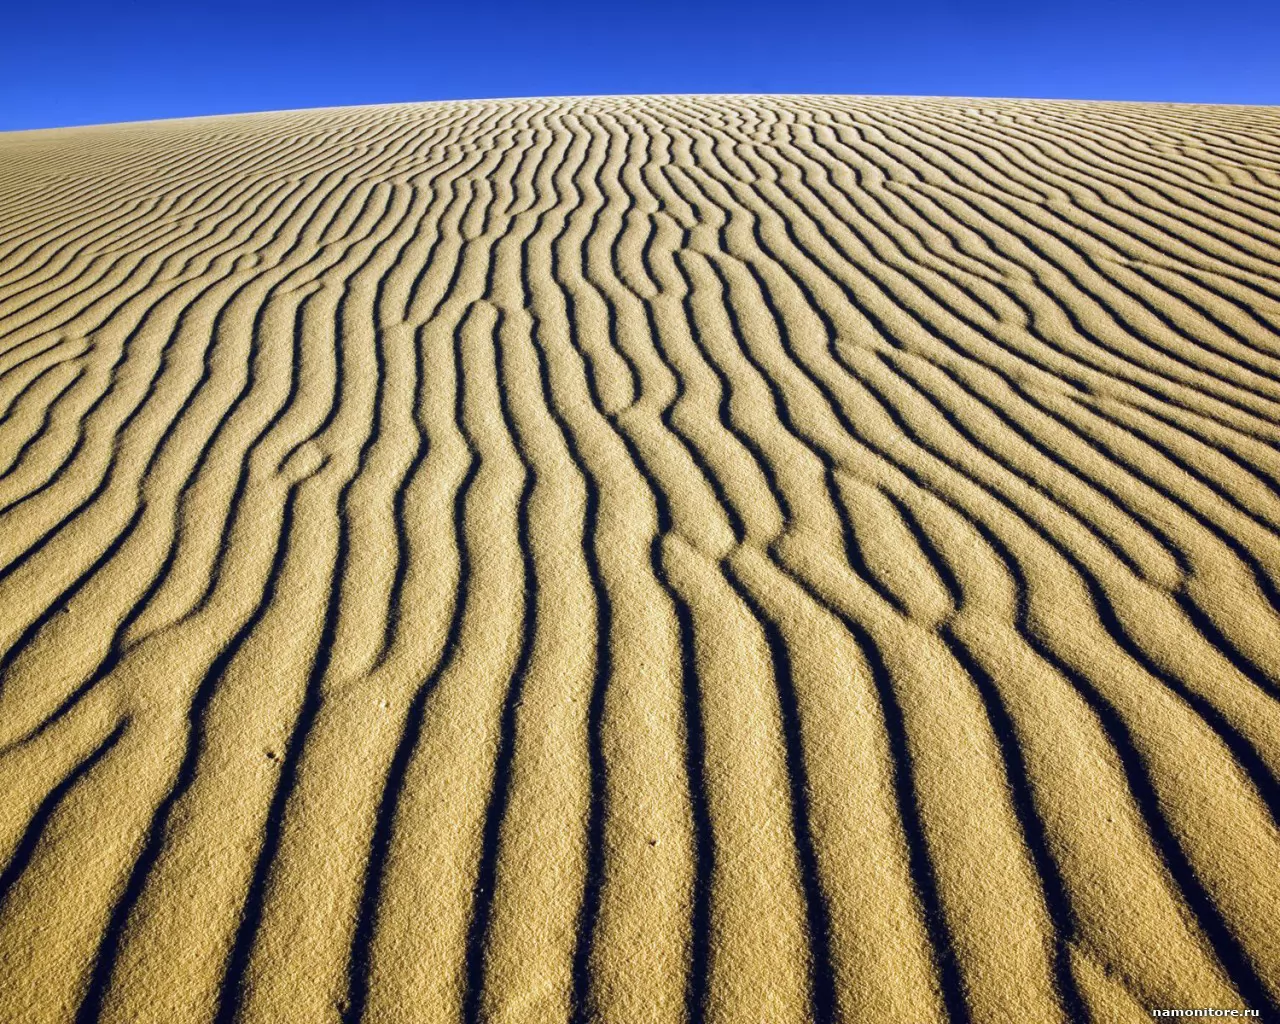 Sand, desert, nature x